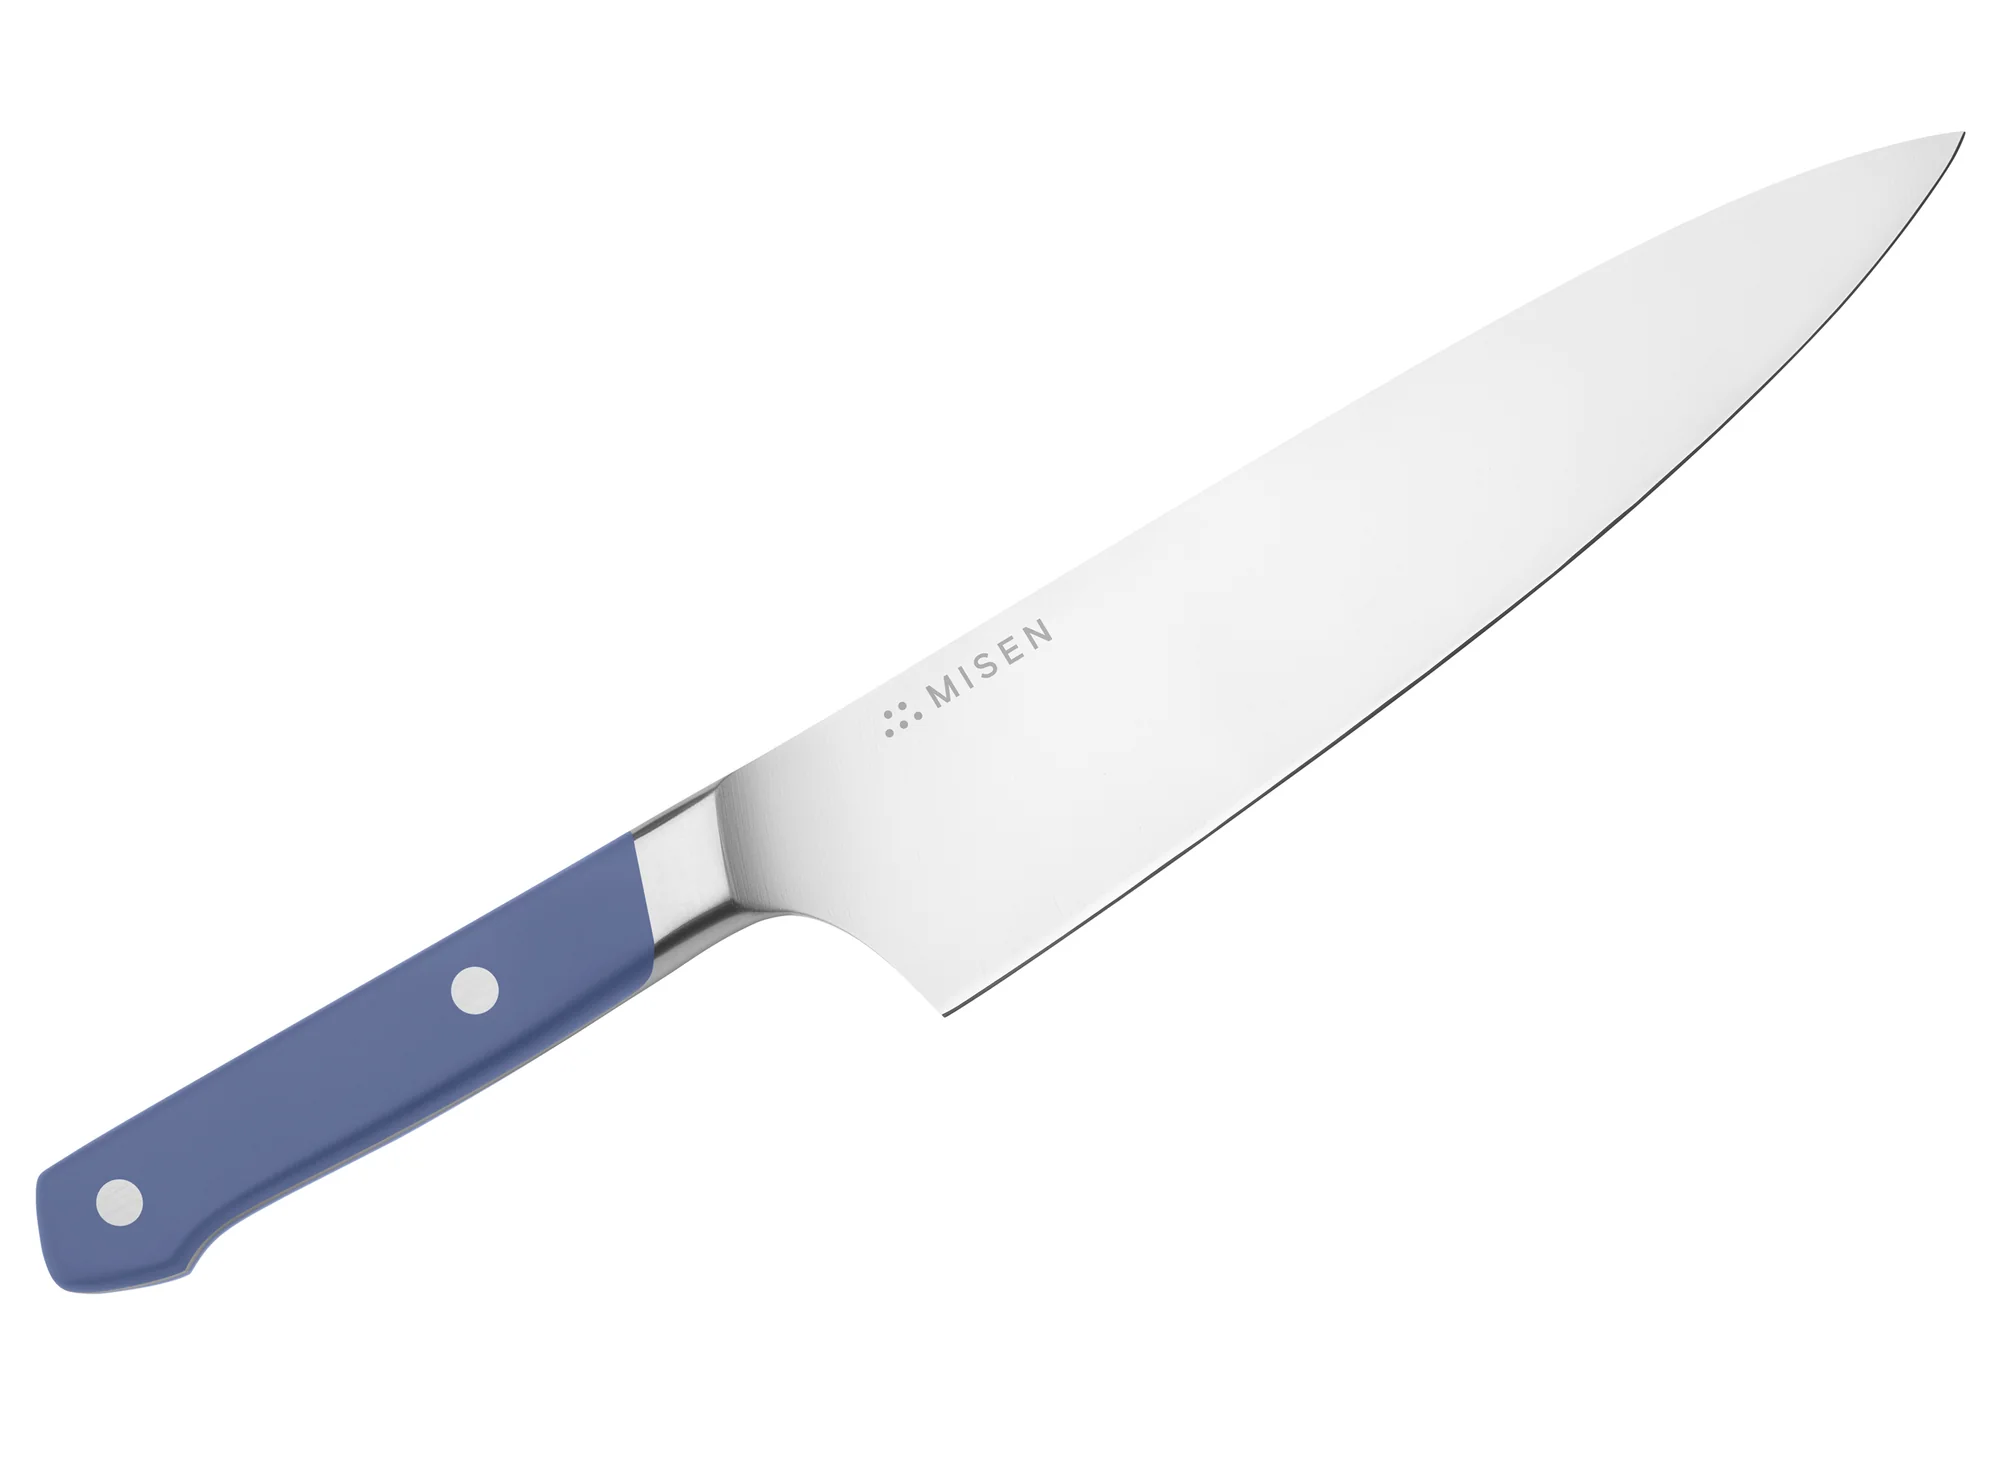 Misen 8 inch Chef's Knife